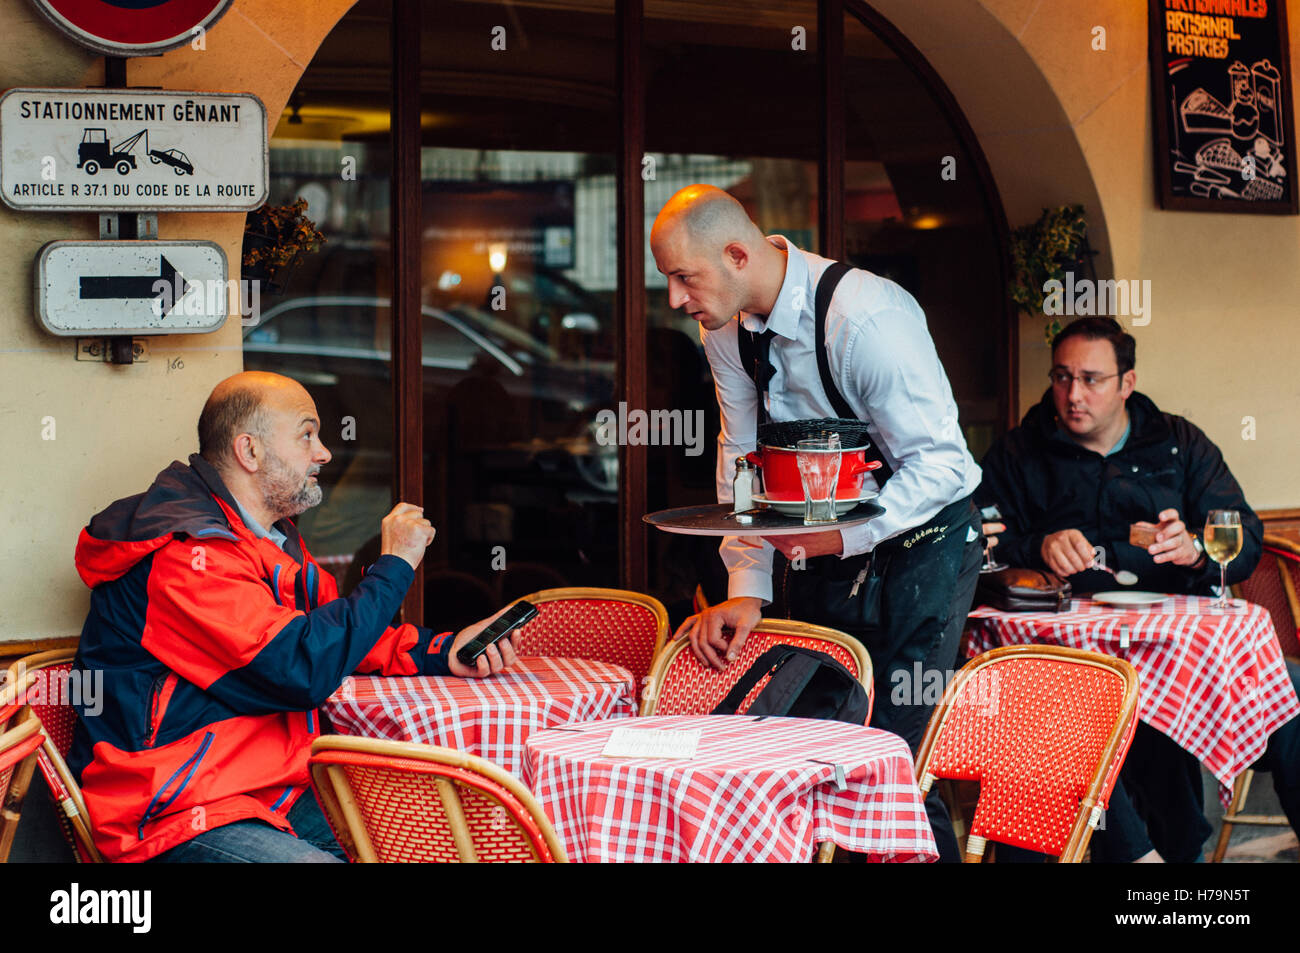 PARIS, Frankreich - 4. November 2015: Mann spricht mit Kellner im Straßencafé am 4. November 2015 in Montmartre. Kellner hält Tablett mit Stockfoto